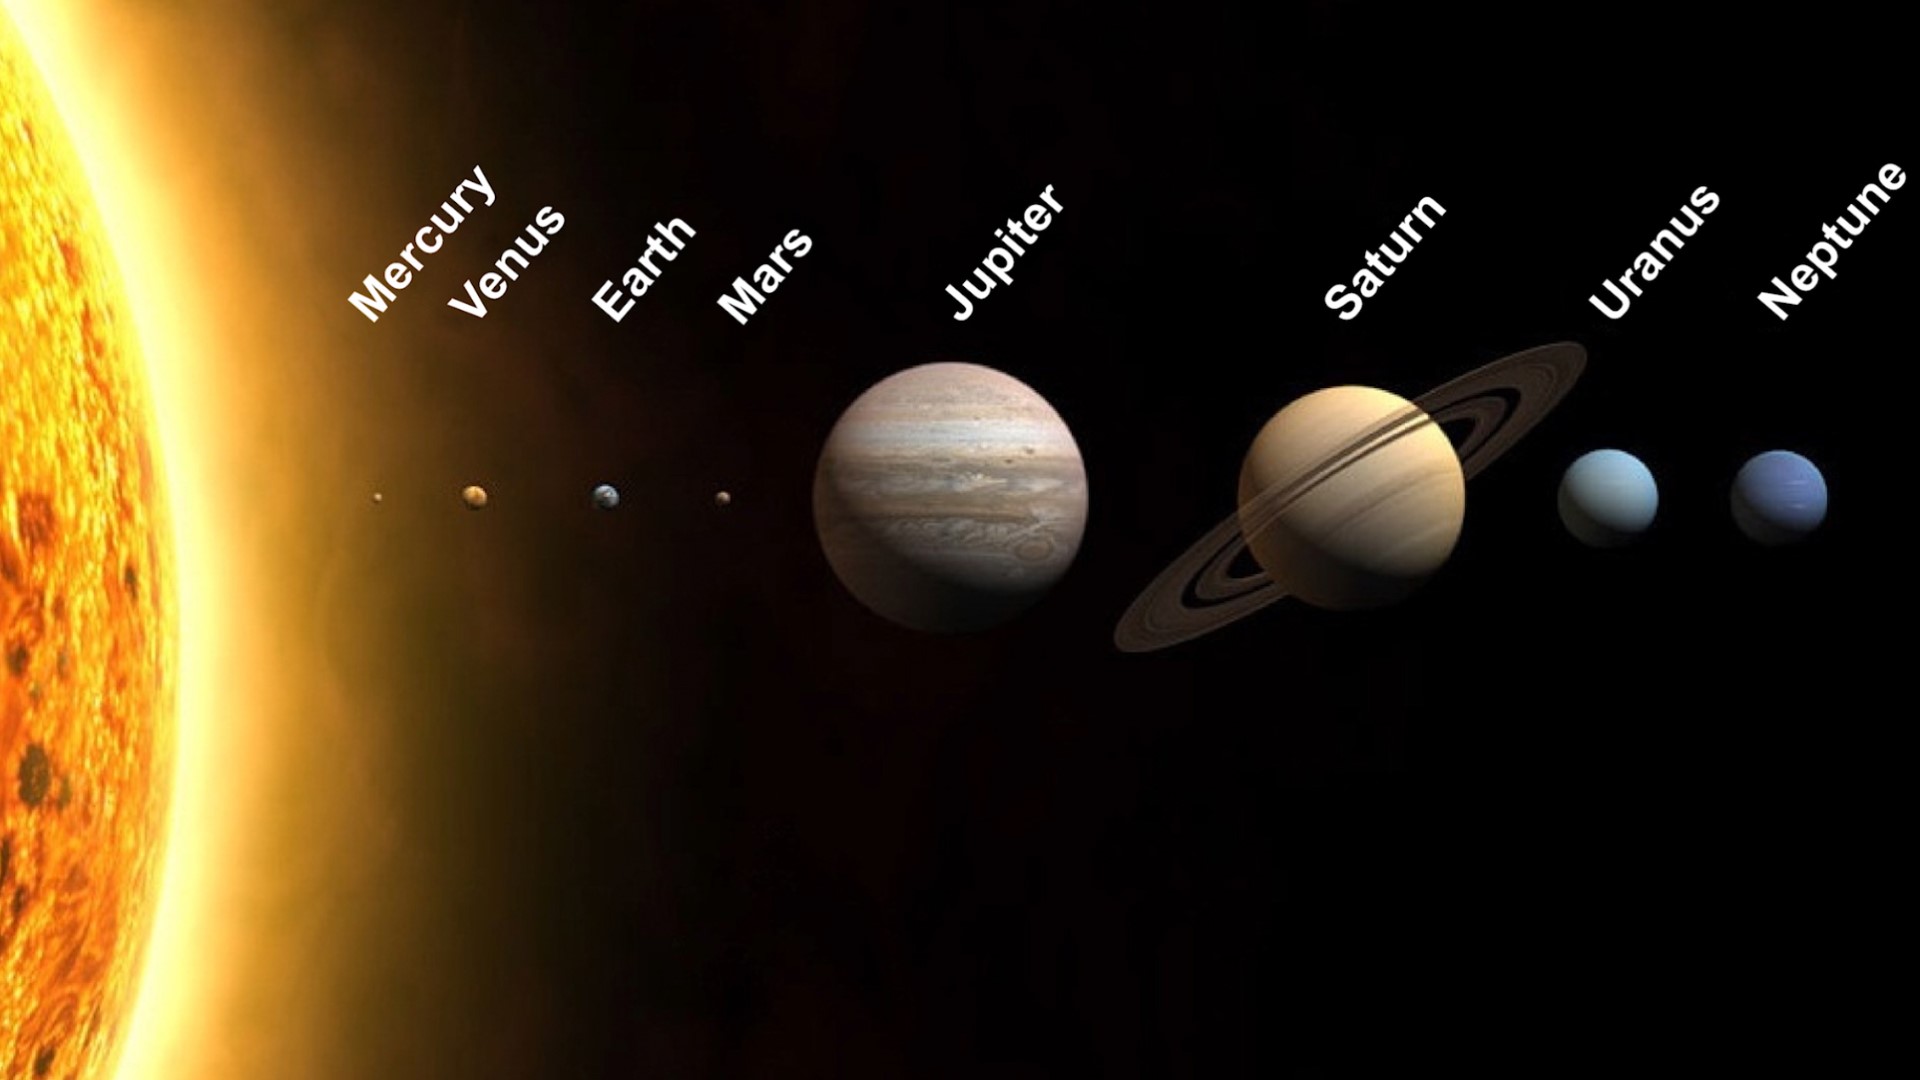 The 9 Solar System